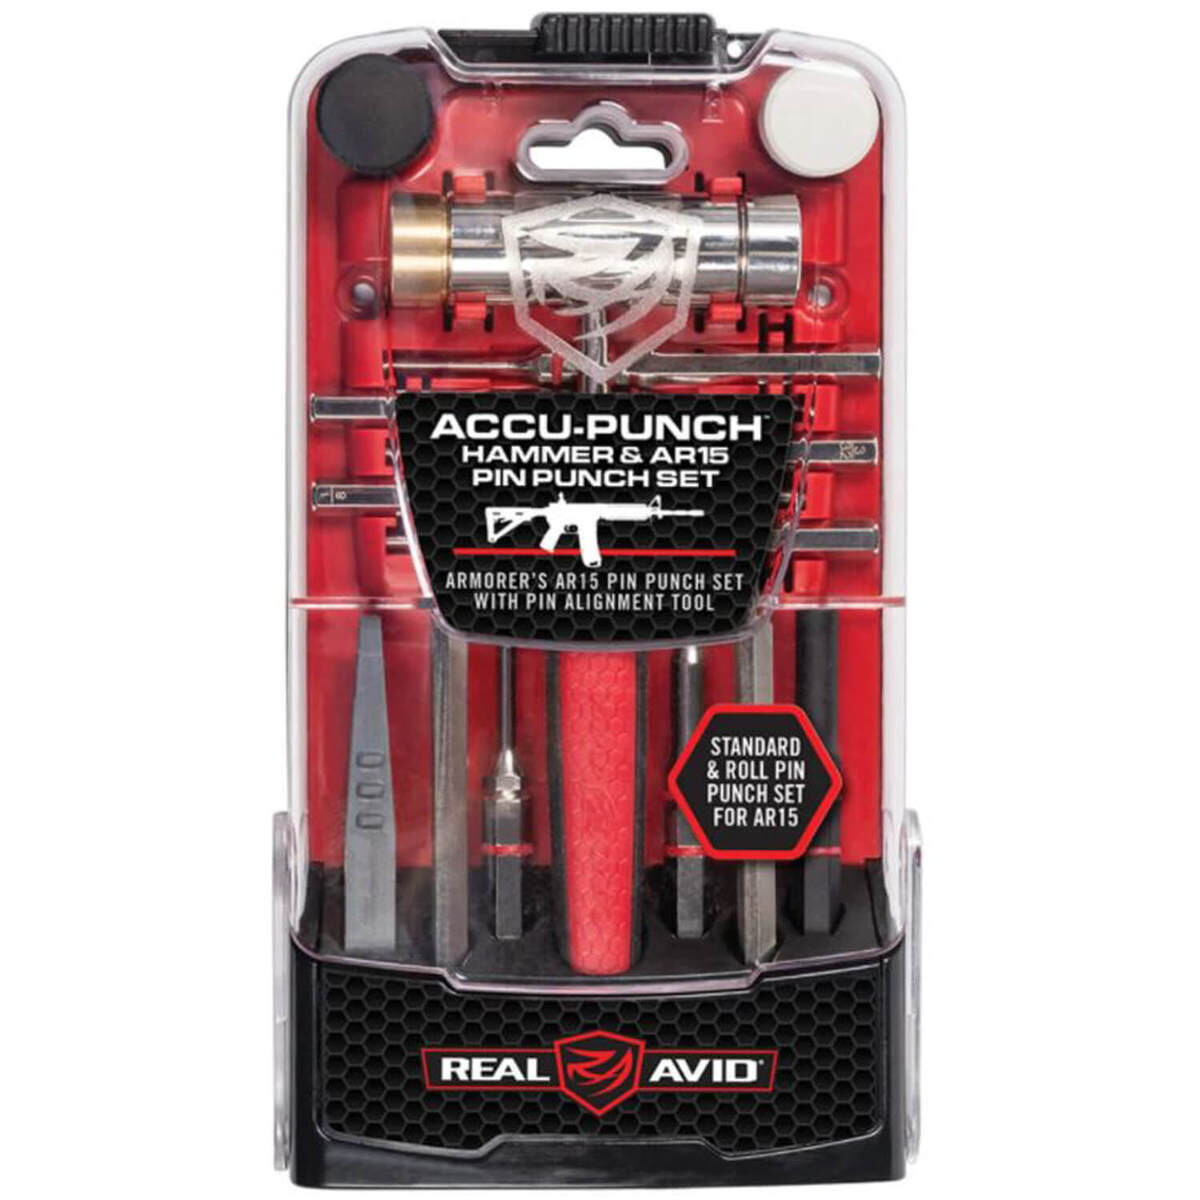 Real Avid Accu-Punch Hammer and AR15 Pin Punch Set